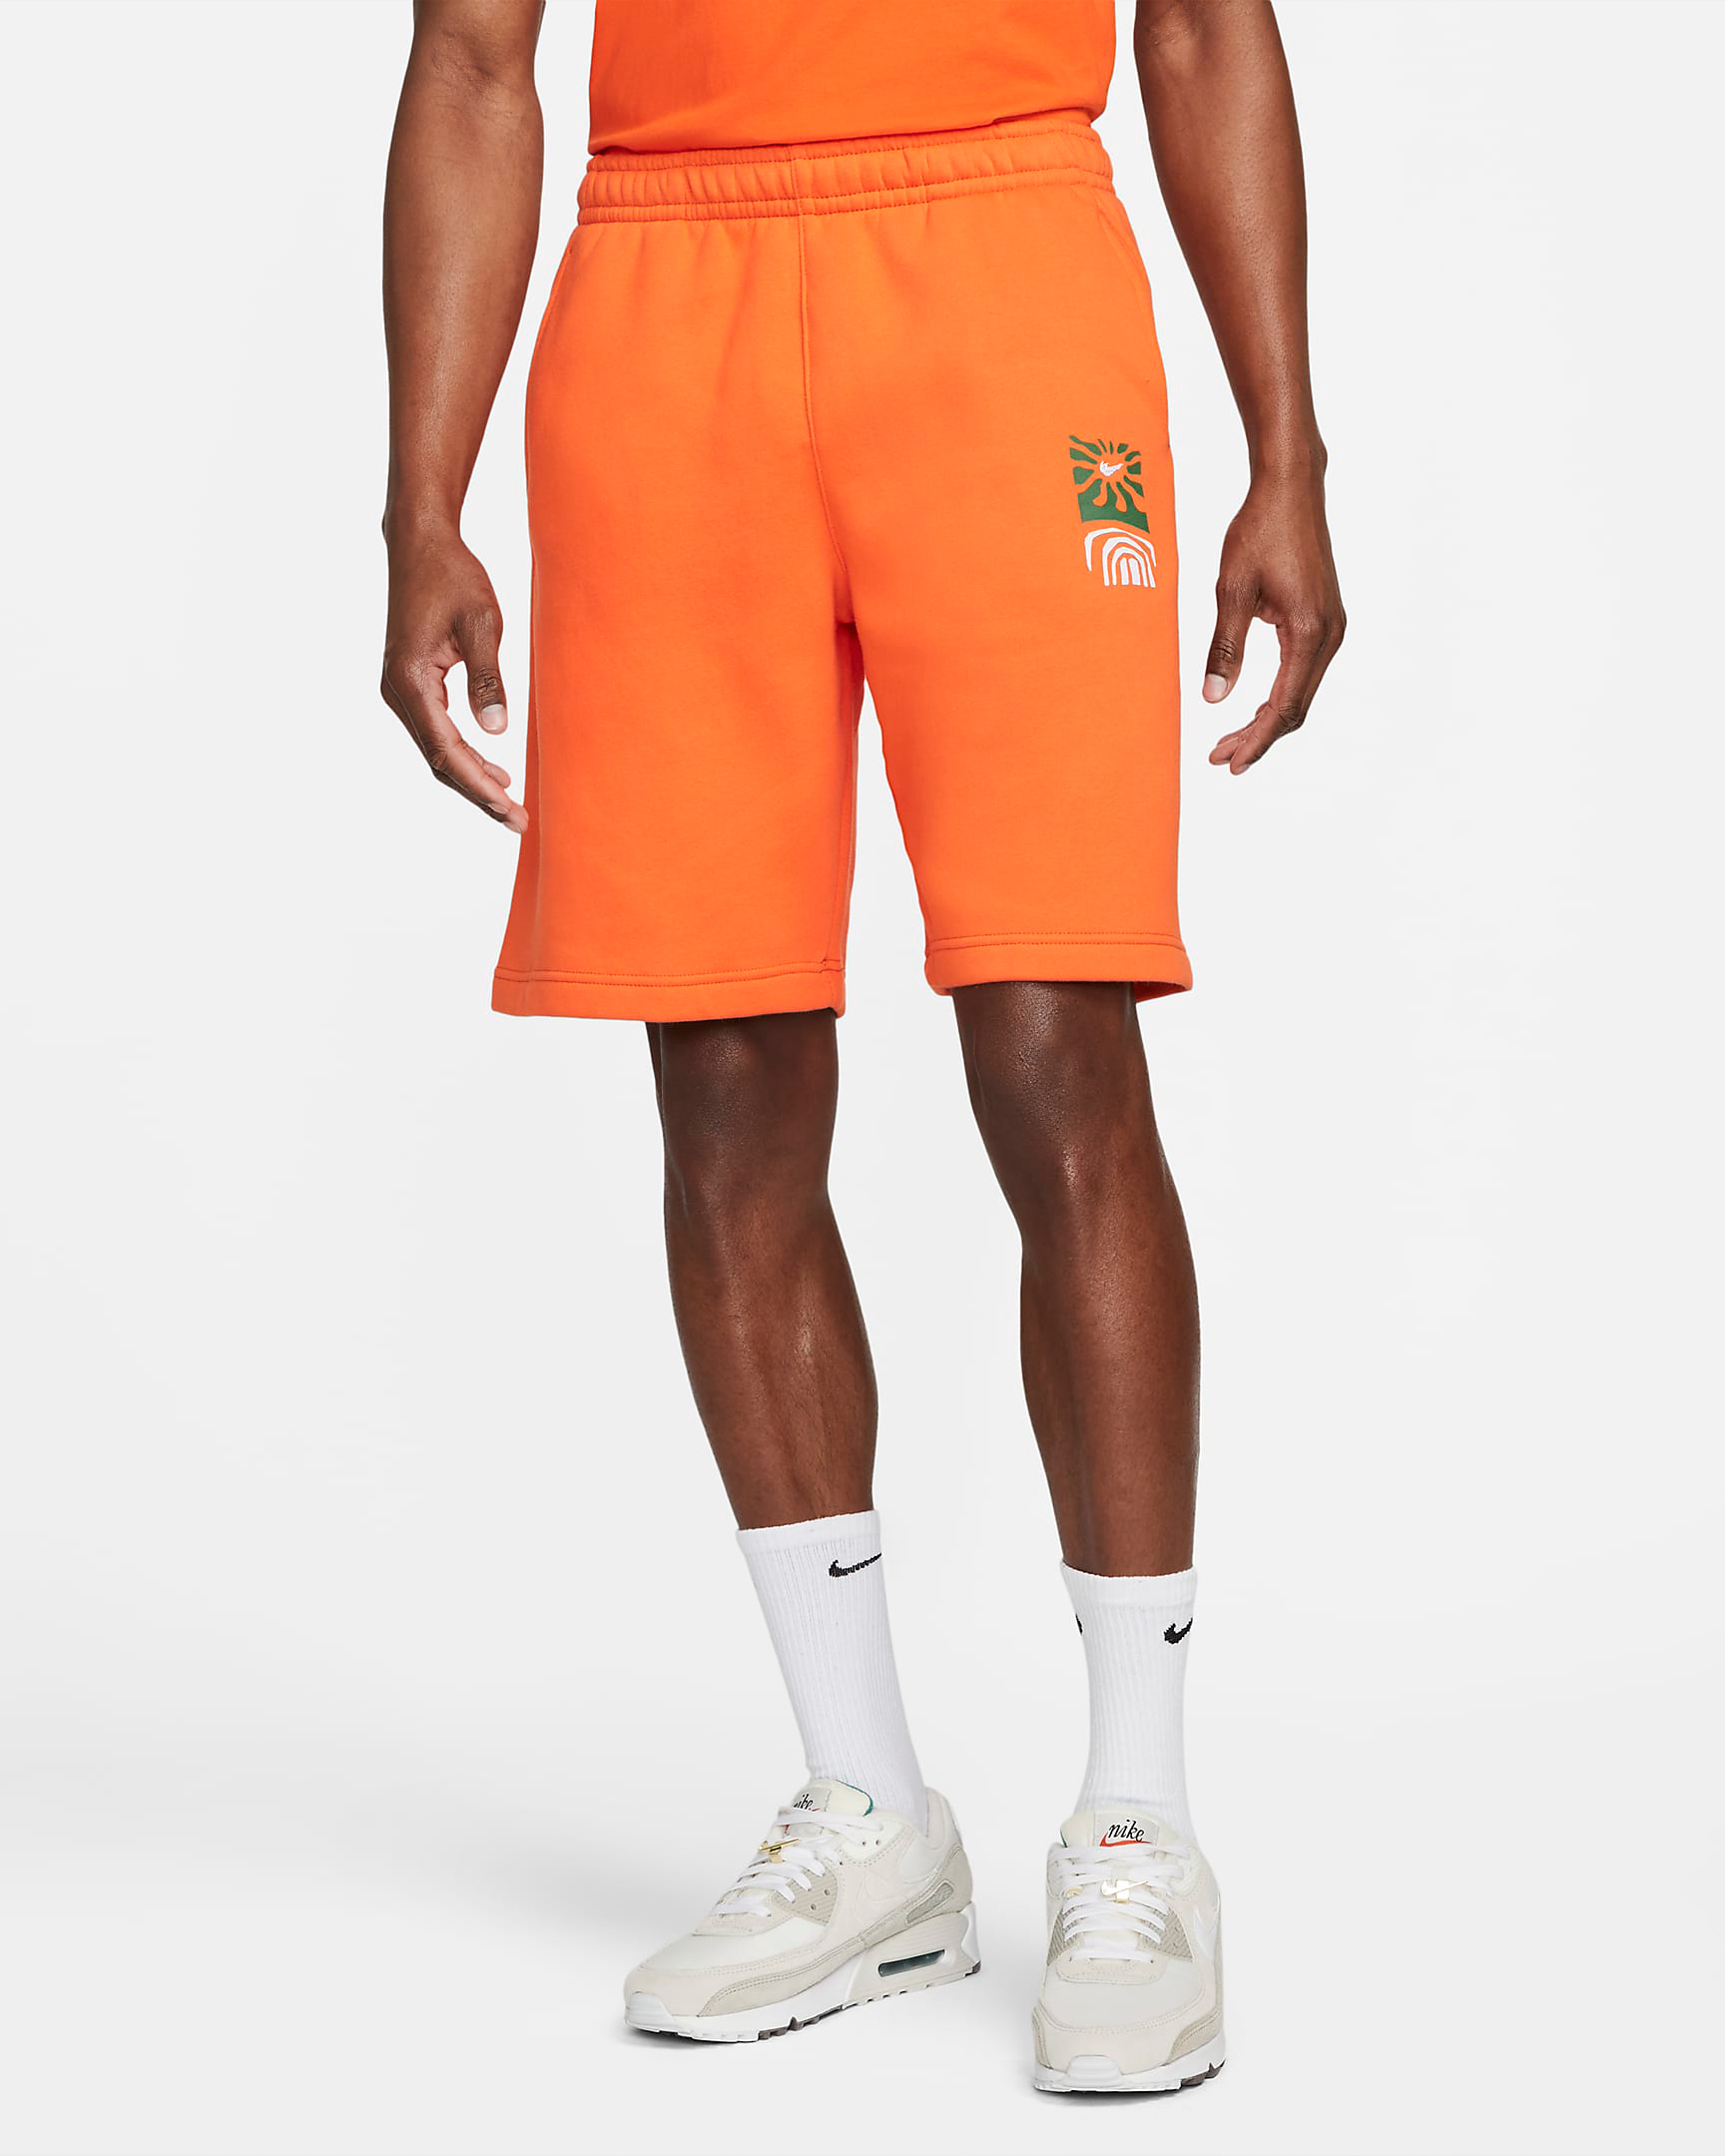 nike-sportswear-vacation-shorts-rush-orange-1